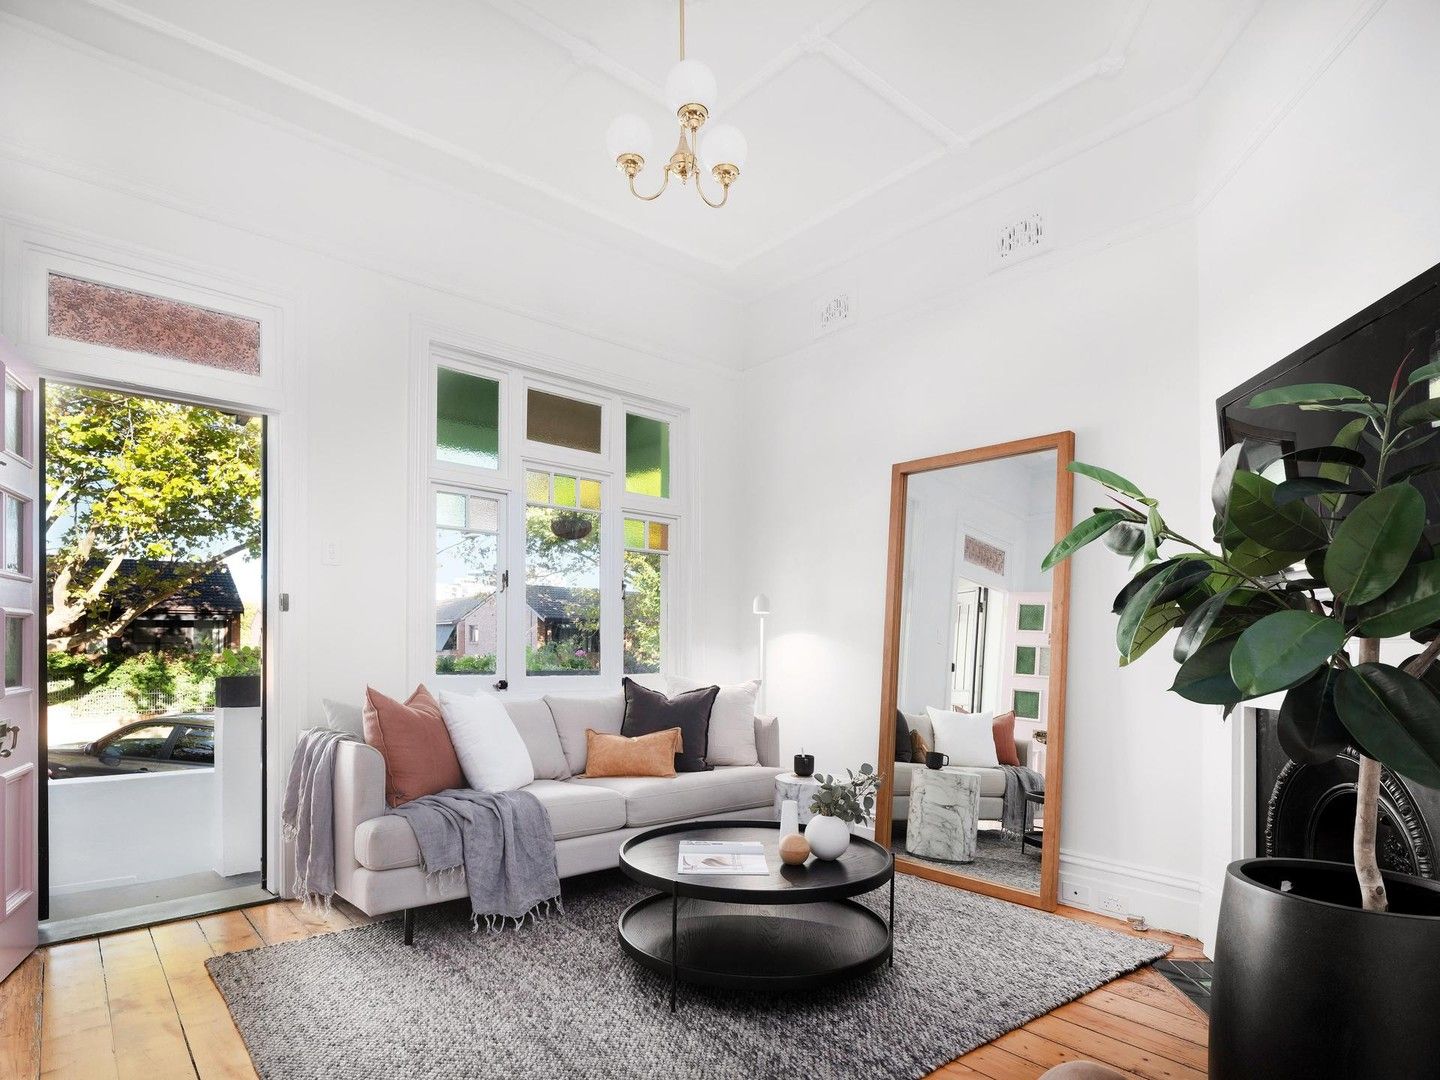 2 bedrooms Apartment / Unit / Flat in 152 Trafalgar Street ANNANDALE NSW, 2038